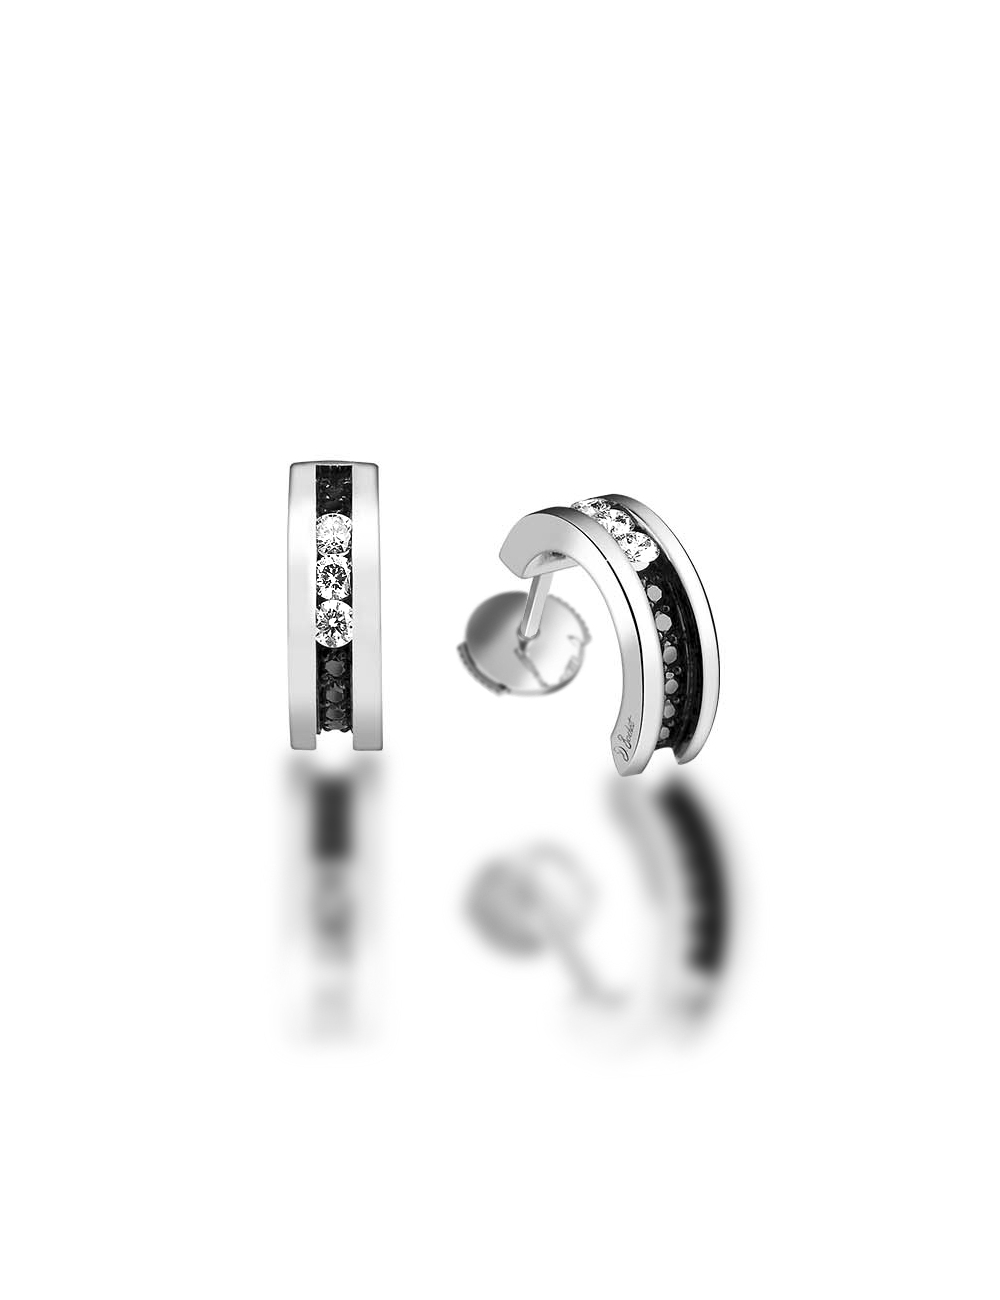 Semi Hoop Diamond Earrings, modern and feminine, set with a white diamond trilogy.